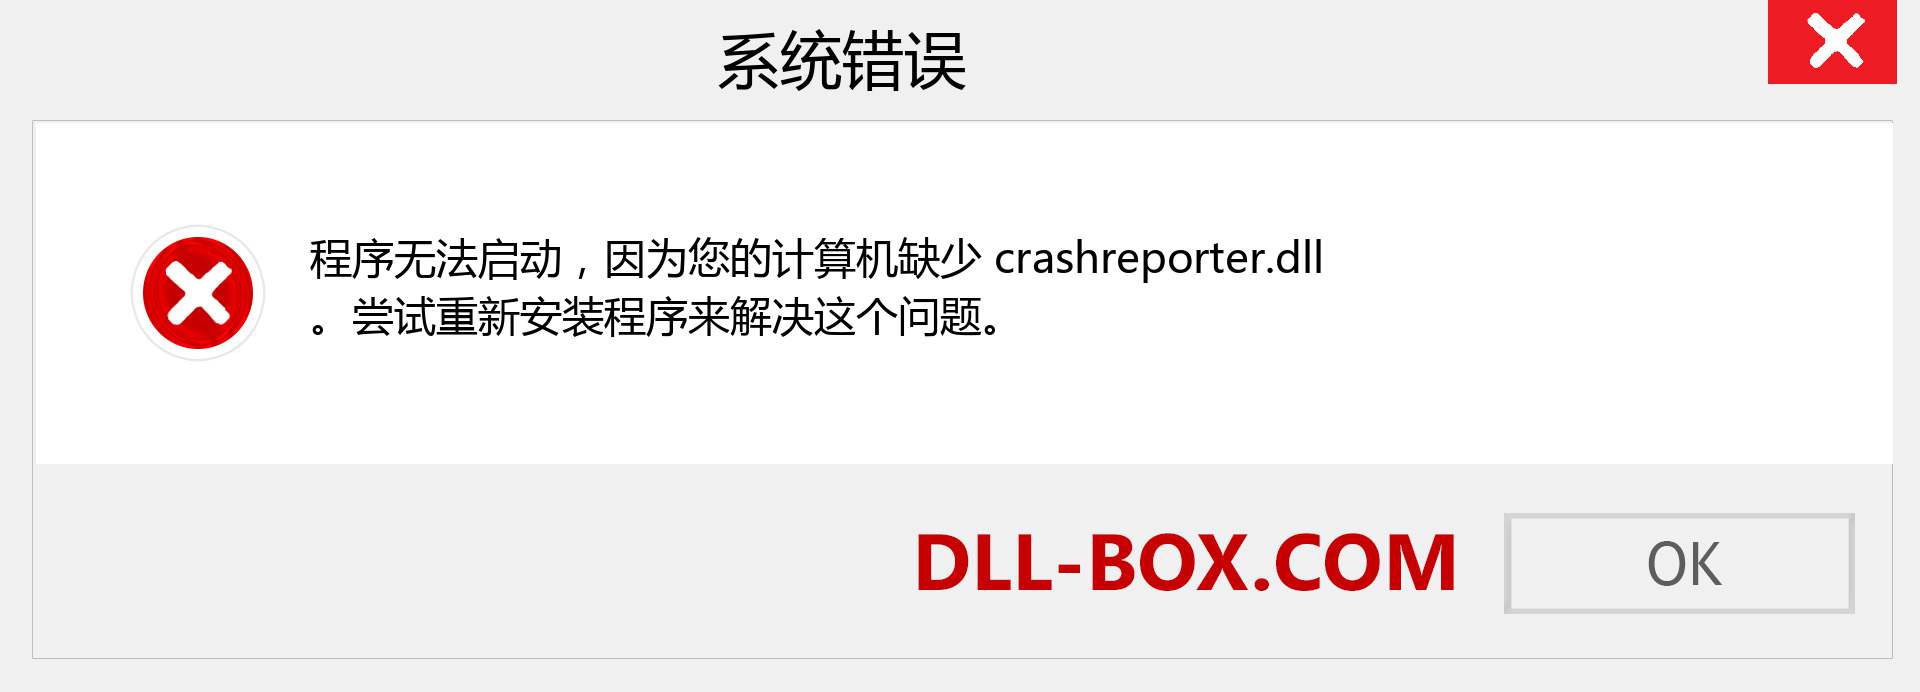 crashreporter.dll 文件丢失？。 适用于 Windows 7、8、10 的下载 - 修复 Windows、照片、图像上的 crashreporter dll 丢失错误